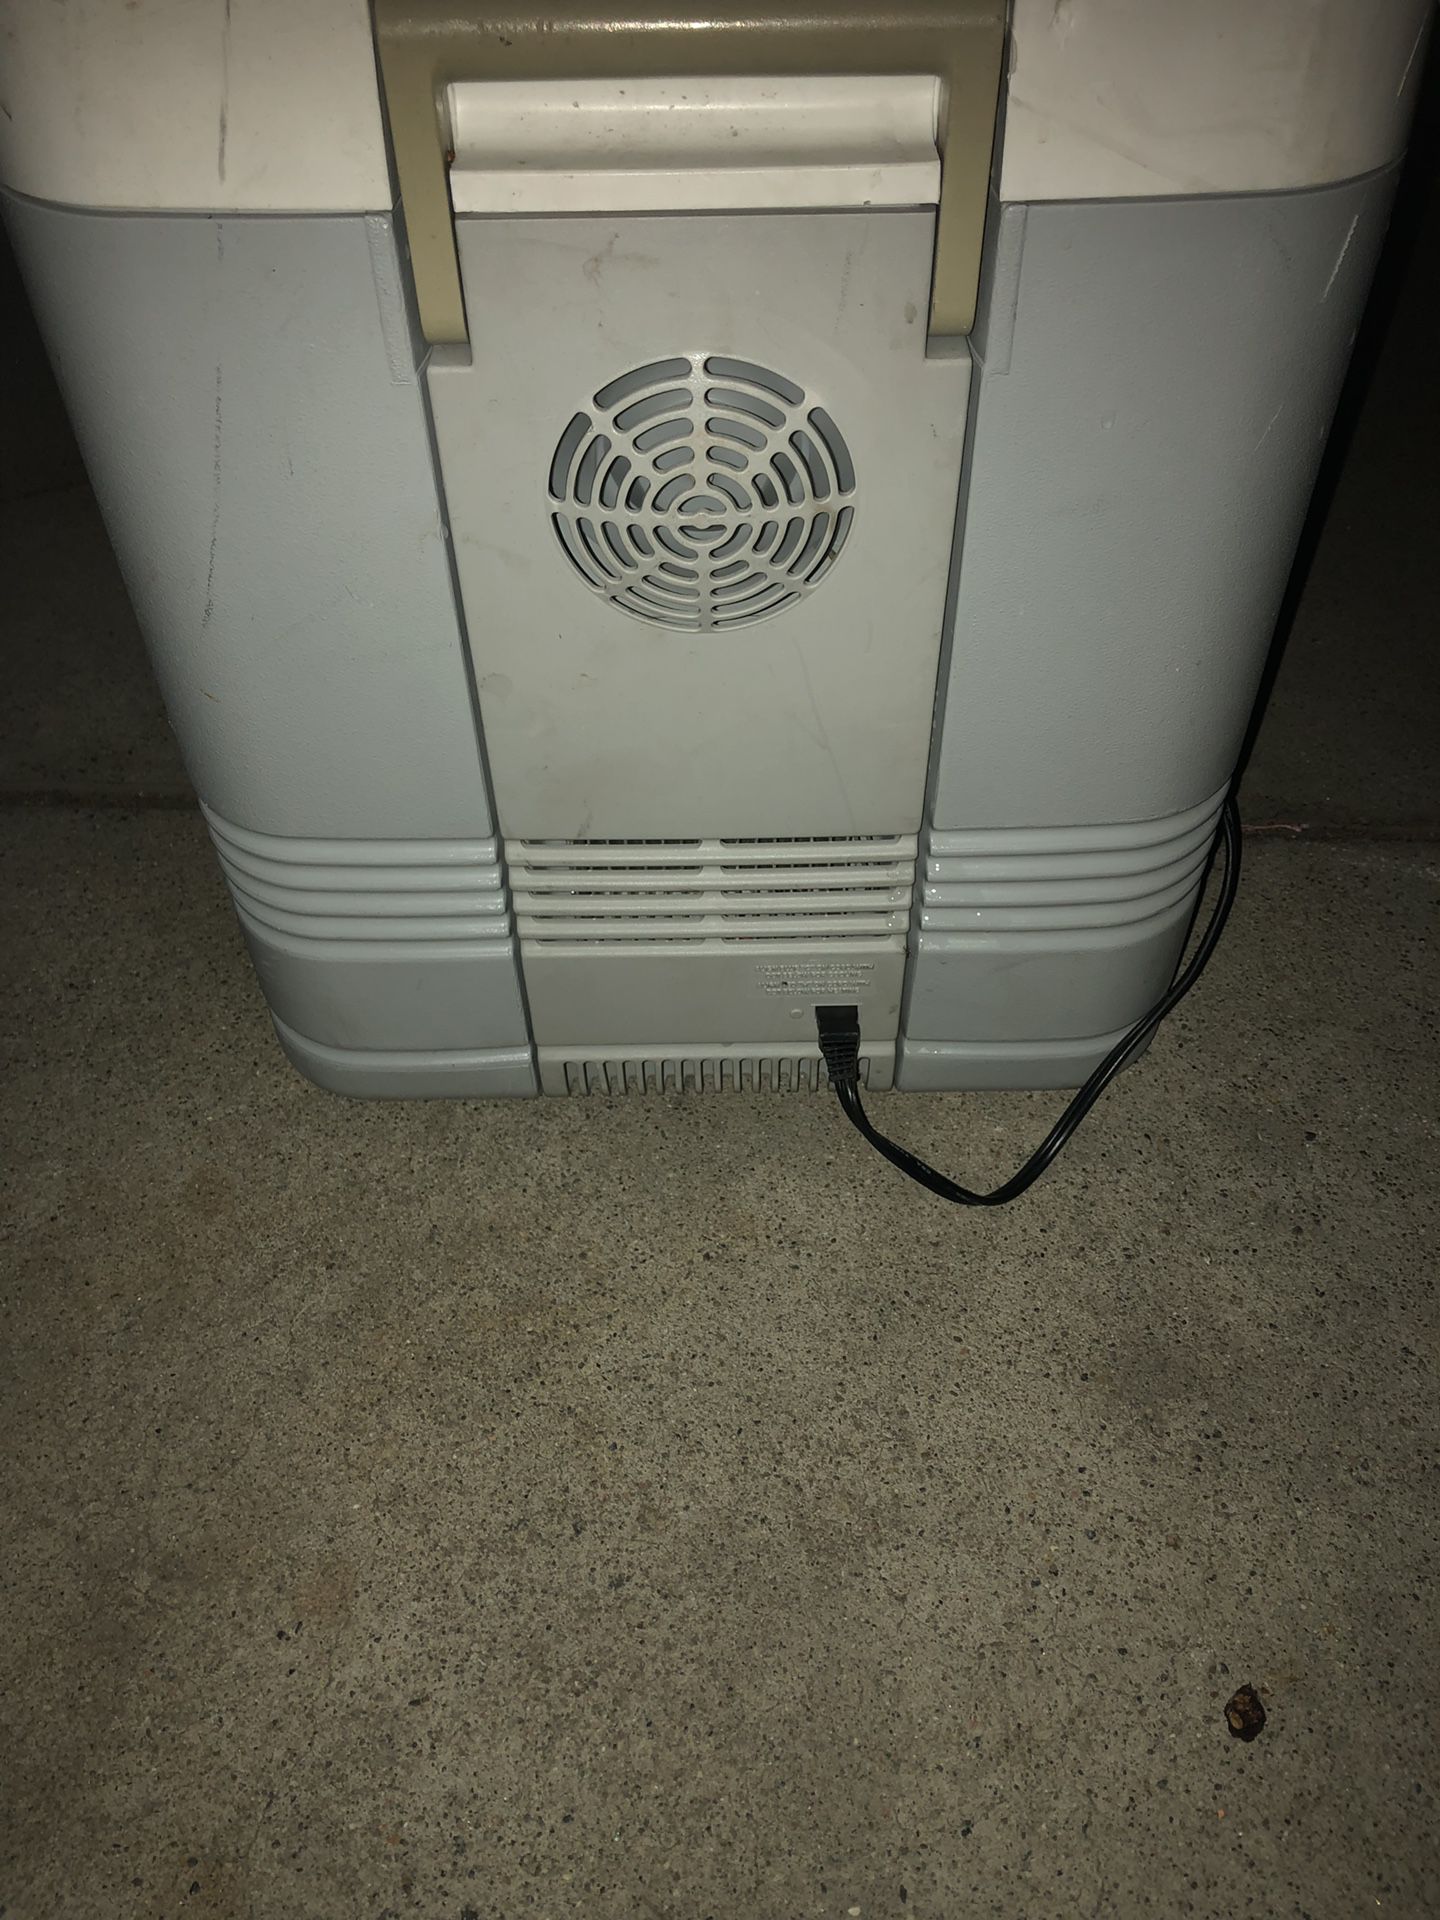 Igloo cooler with car plug